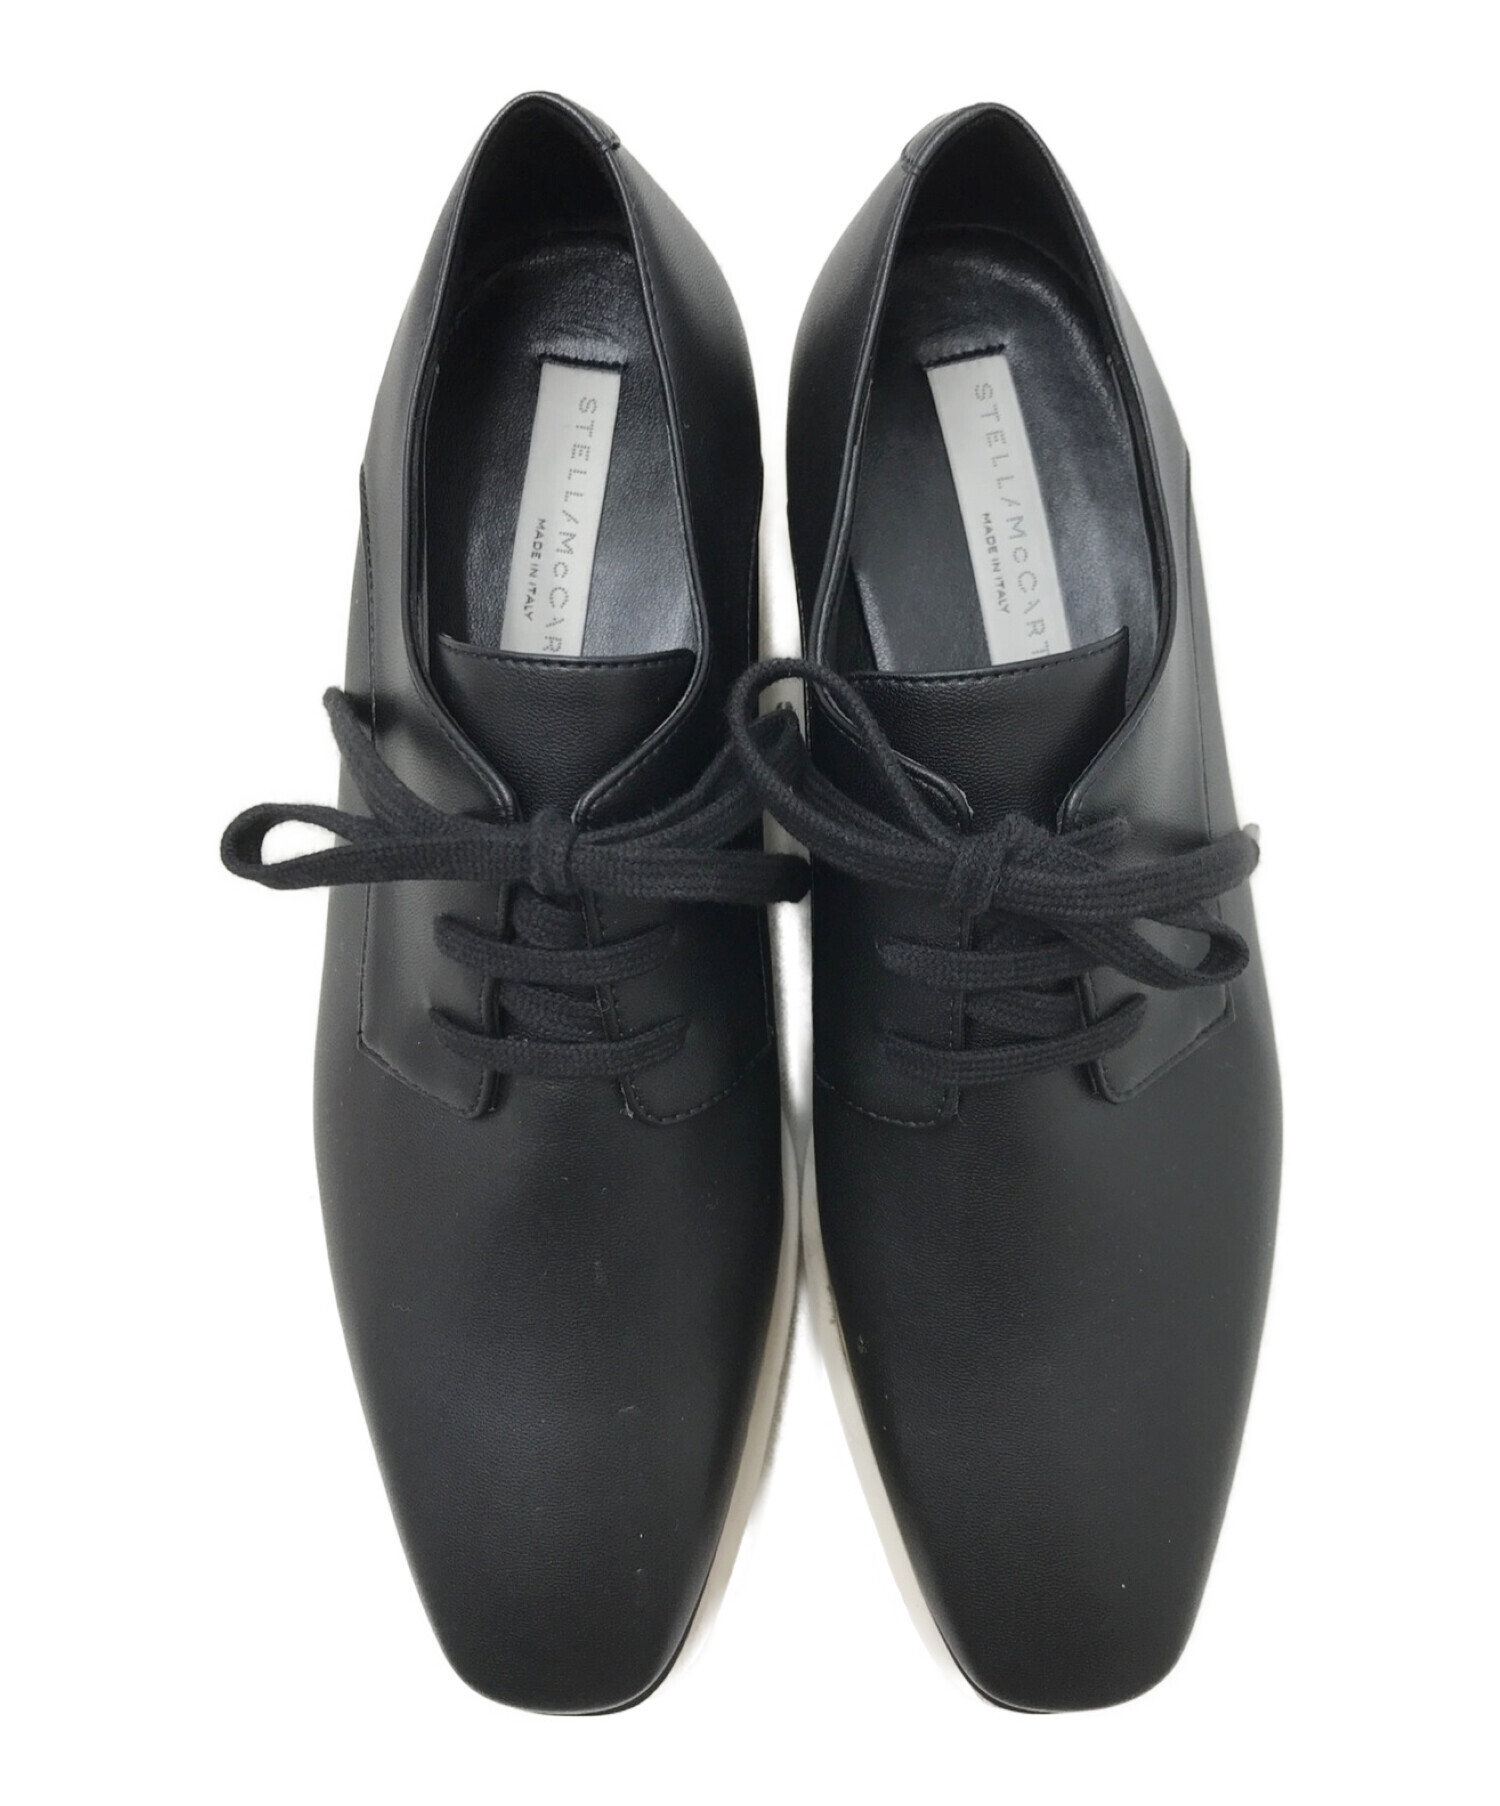 Stella McCartney】 サイズ37 プラットフォームシューズ - 靴